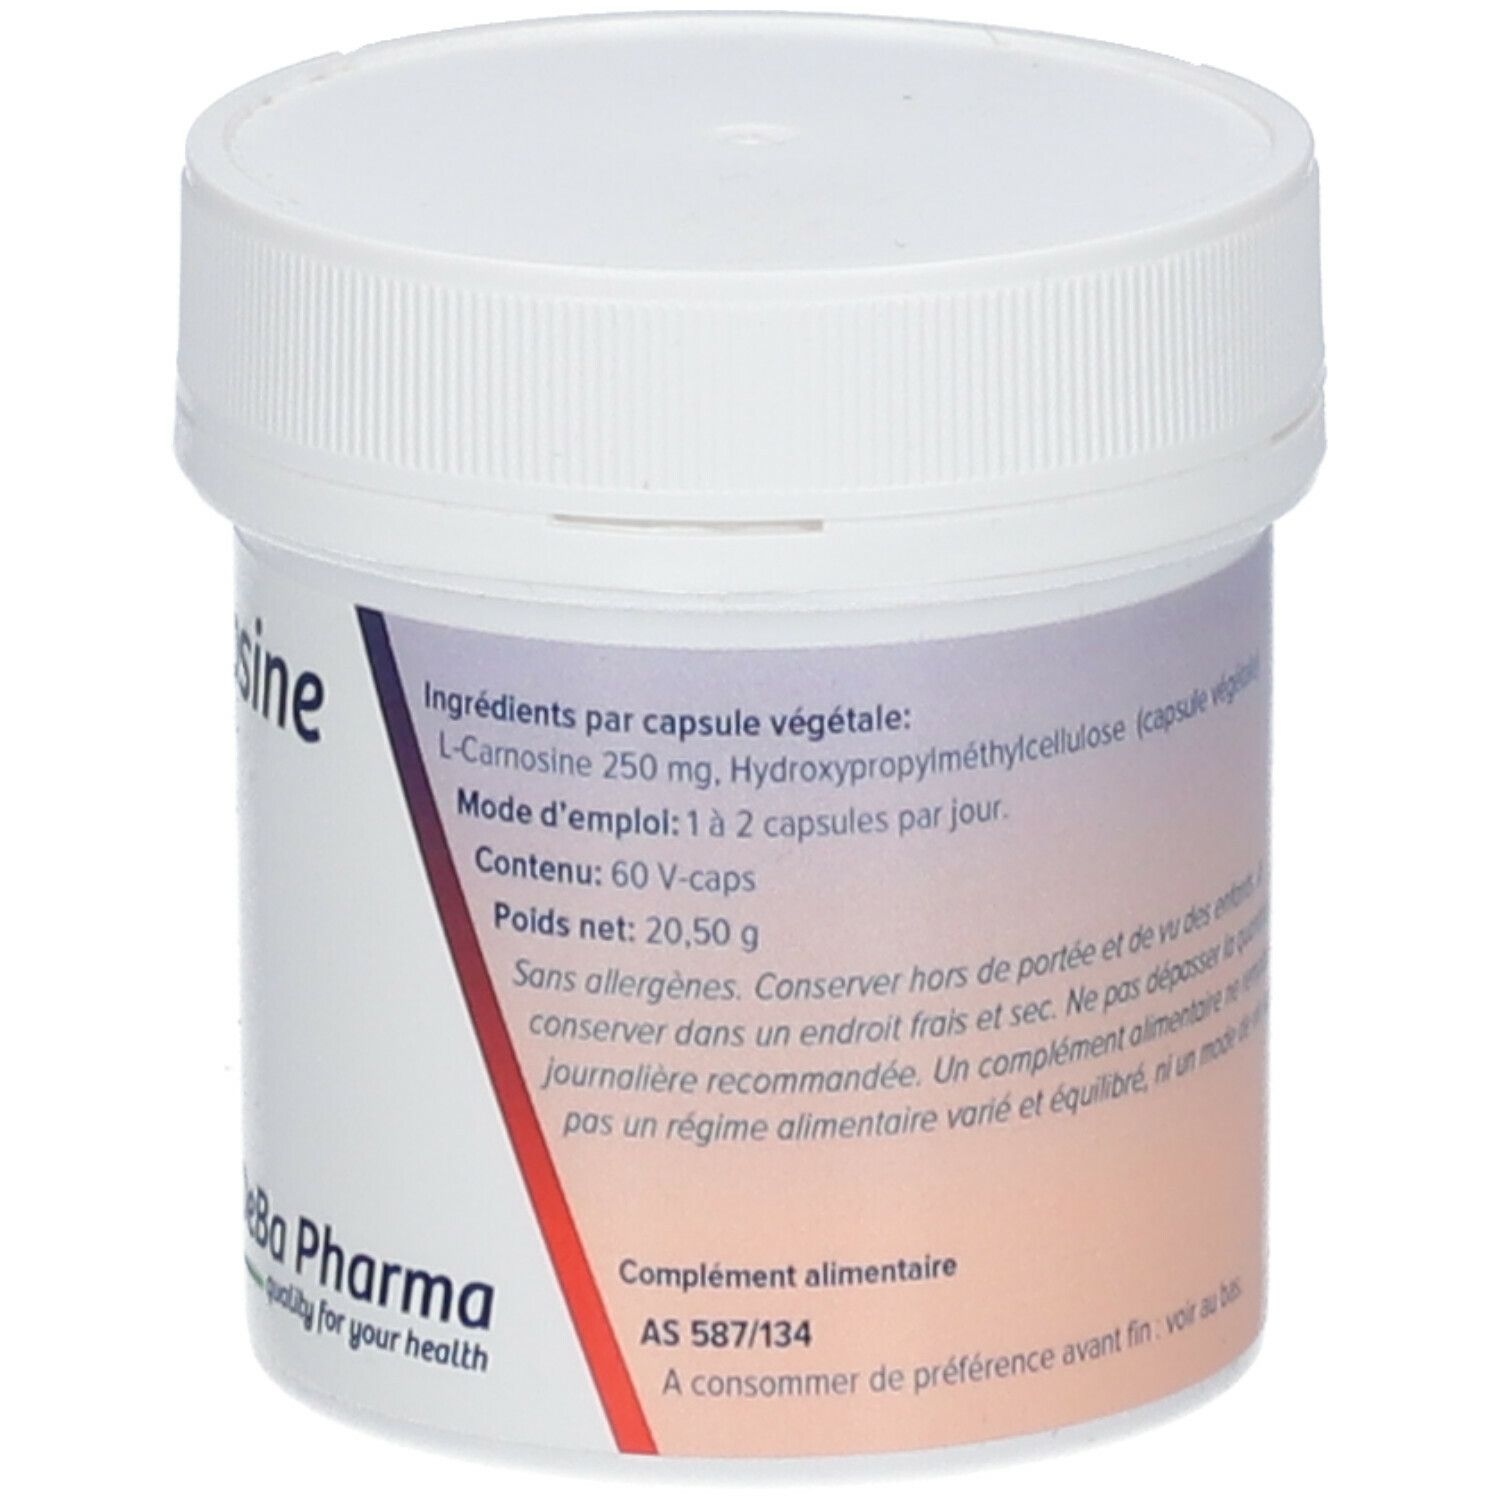 DeBa Pharma L- Carnosine 250 mg